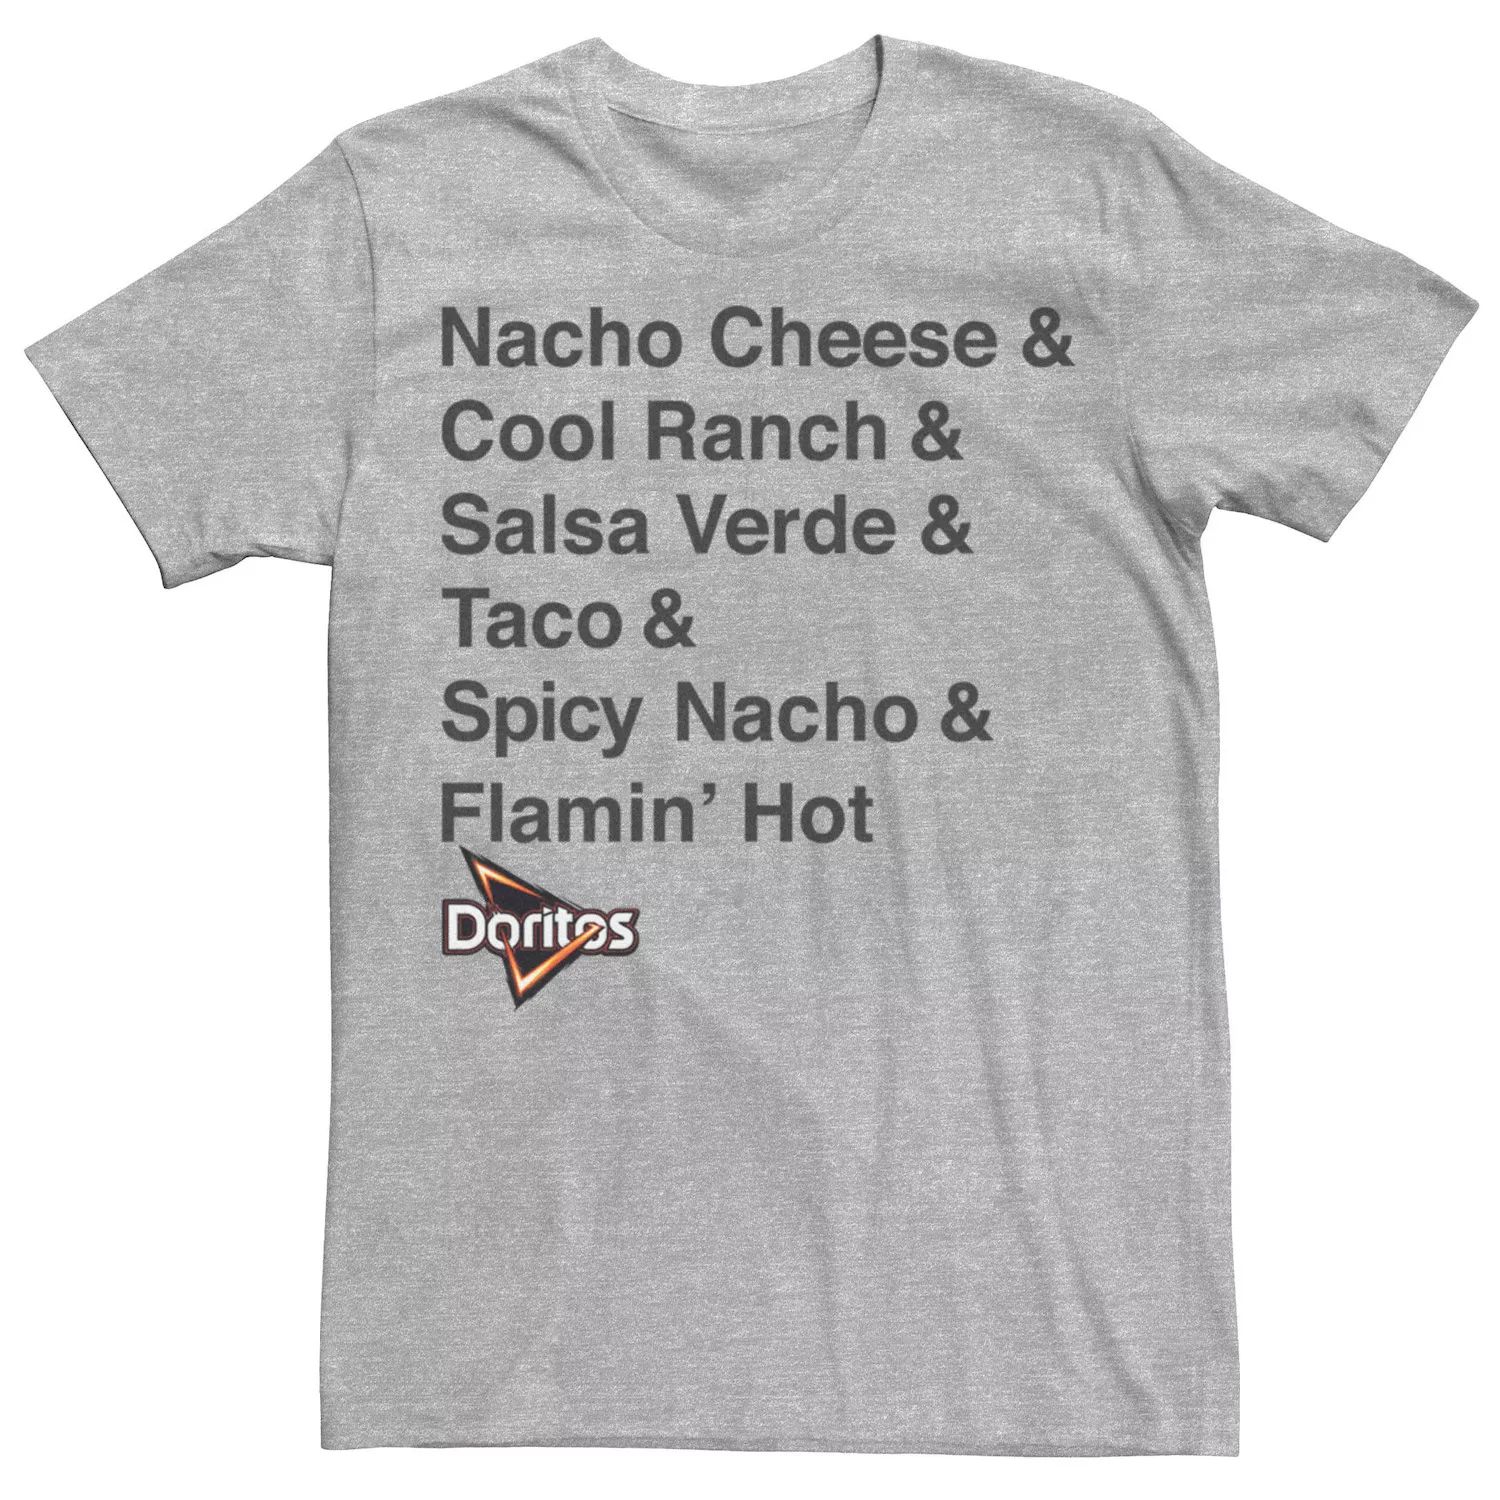 Мужская футболка Doritos Tortilla Chips Flavors Licensed Character мужская футболка с логотипом doritos tortilla chips licensed character